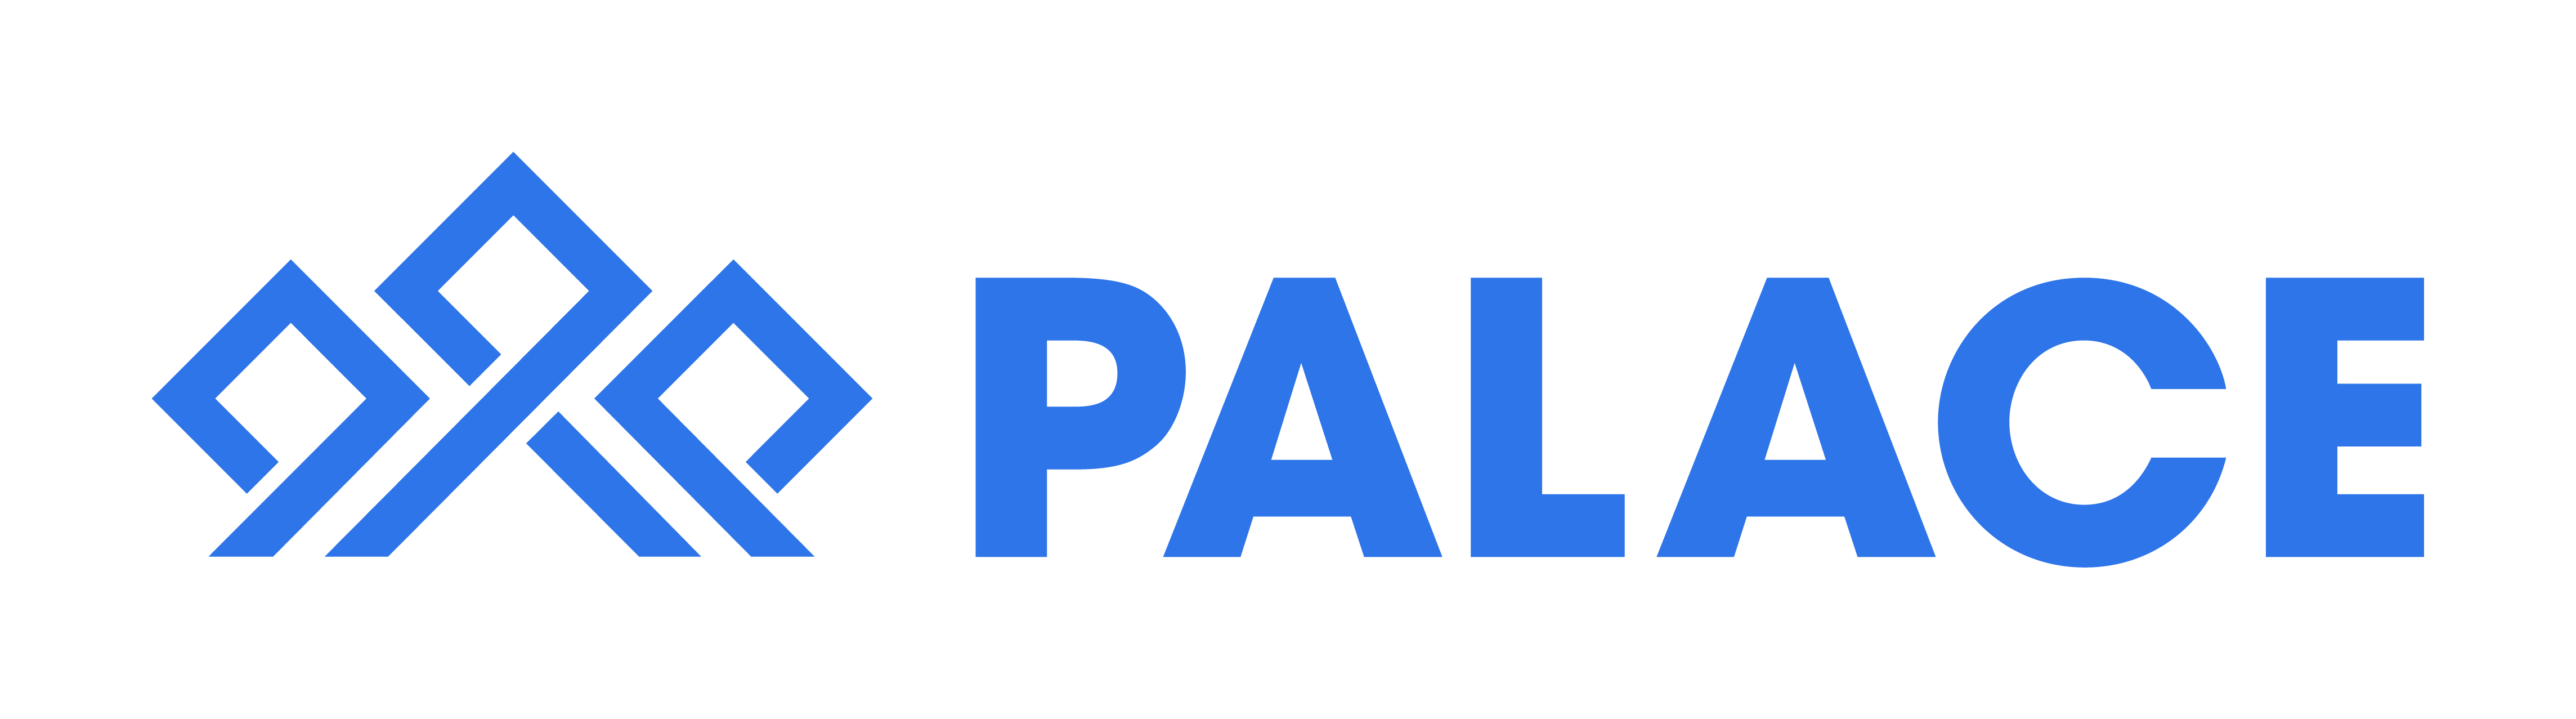 Palace Digital Marketing logo